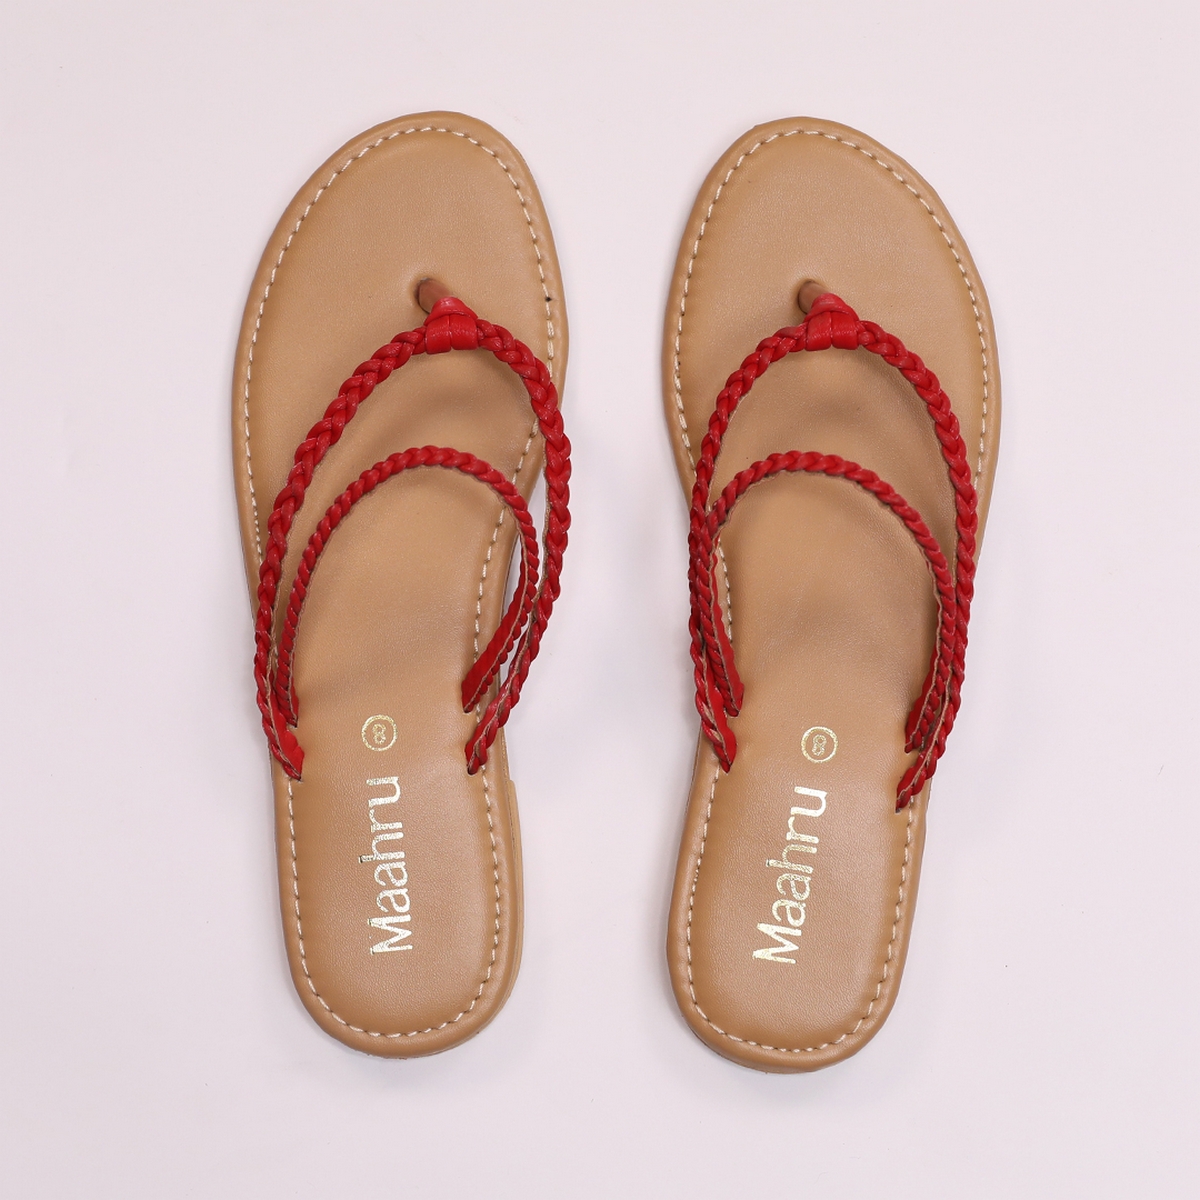 Flat Shoes For Girls & Women - Maahru Red Braid